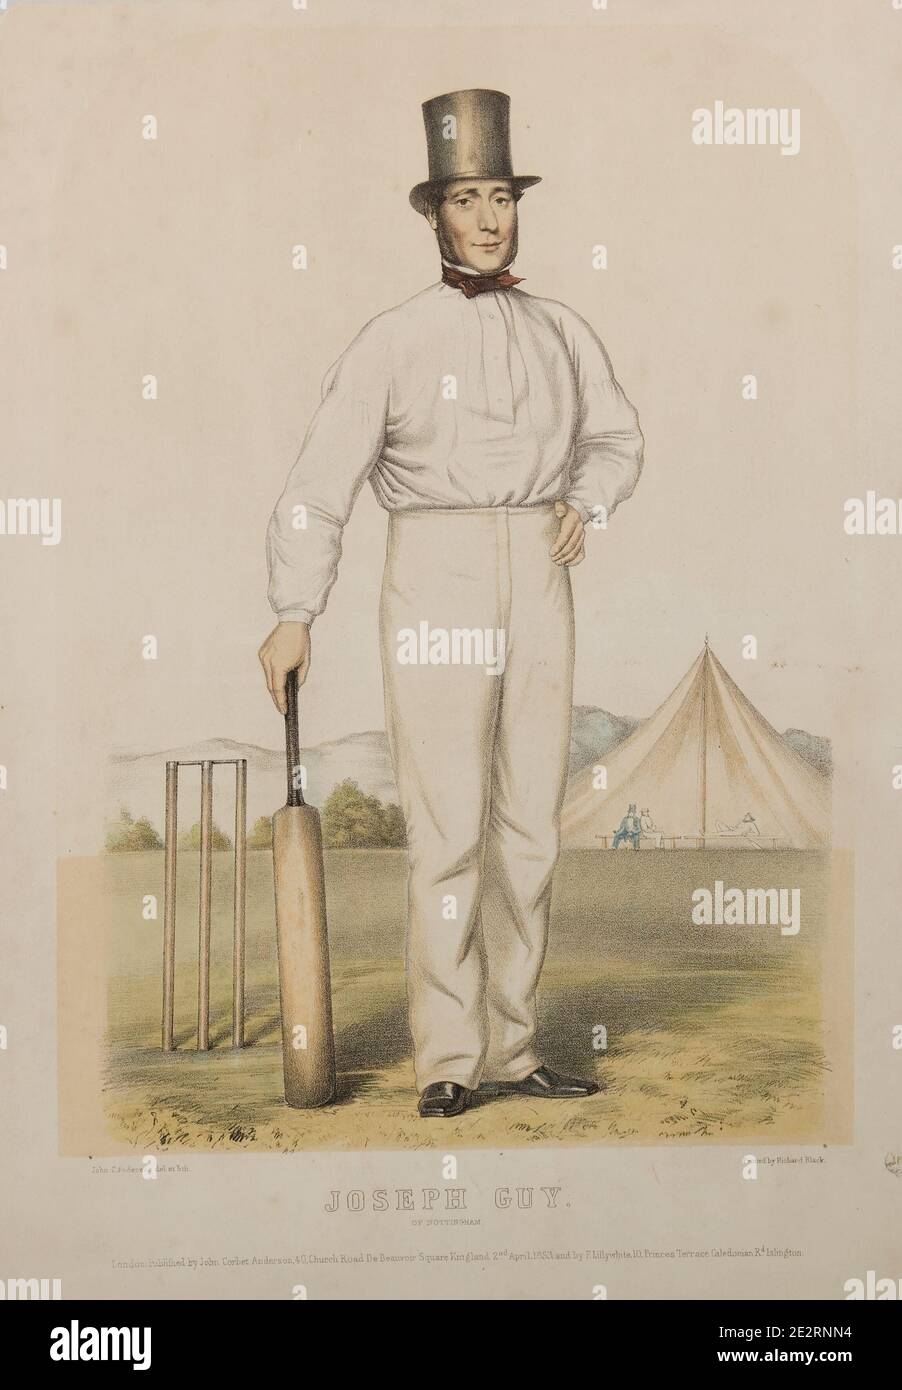 Joseph Guy Cricketer 1813 - 1873 Stock Photo